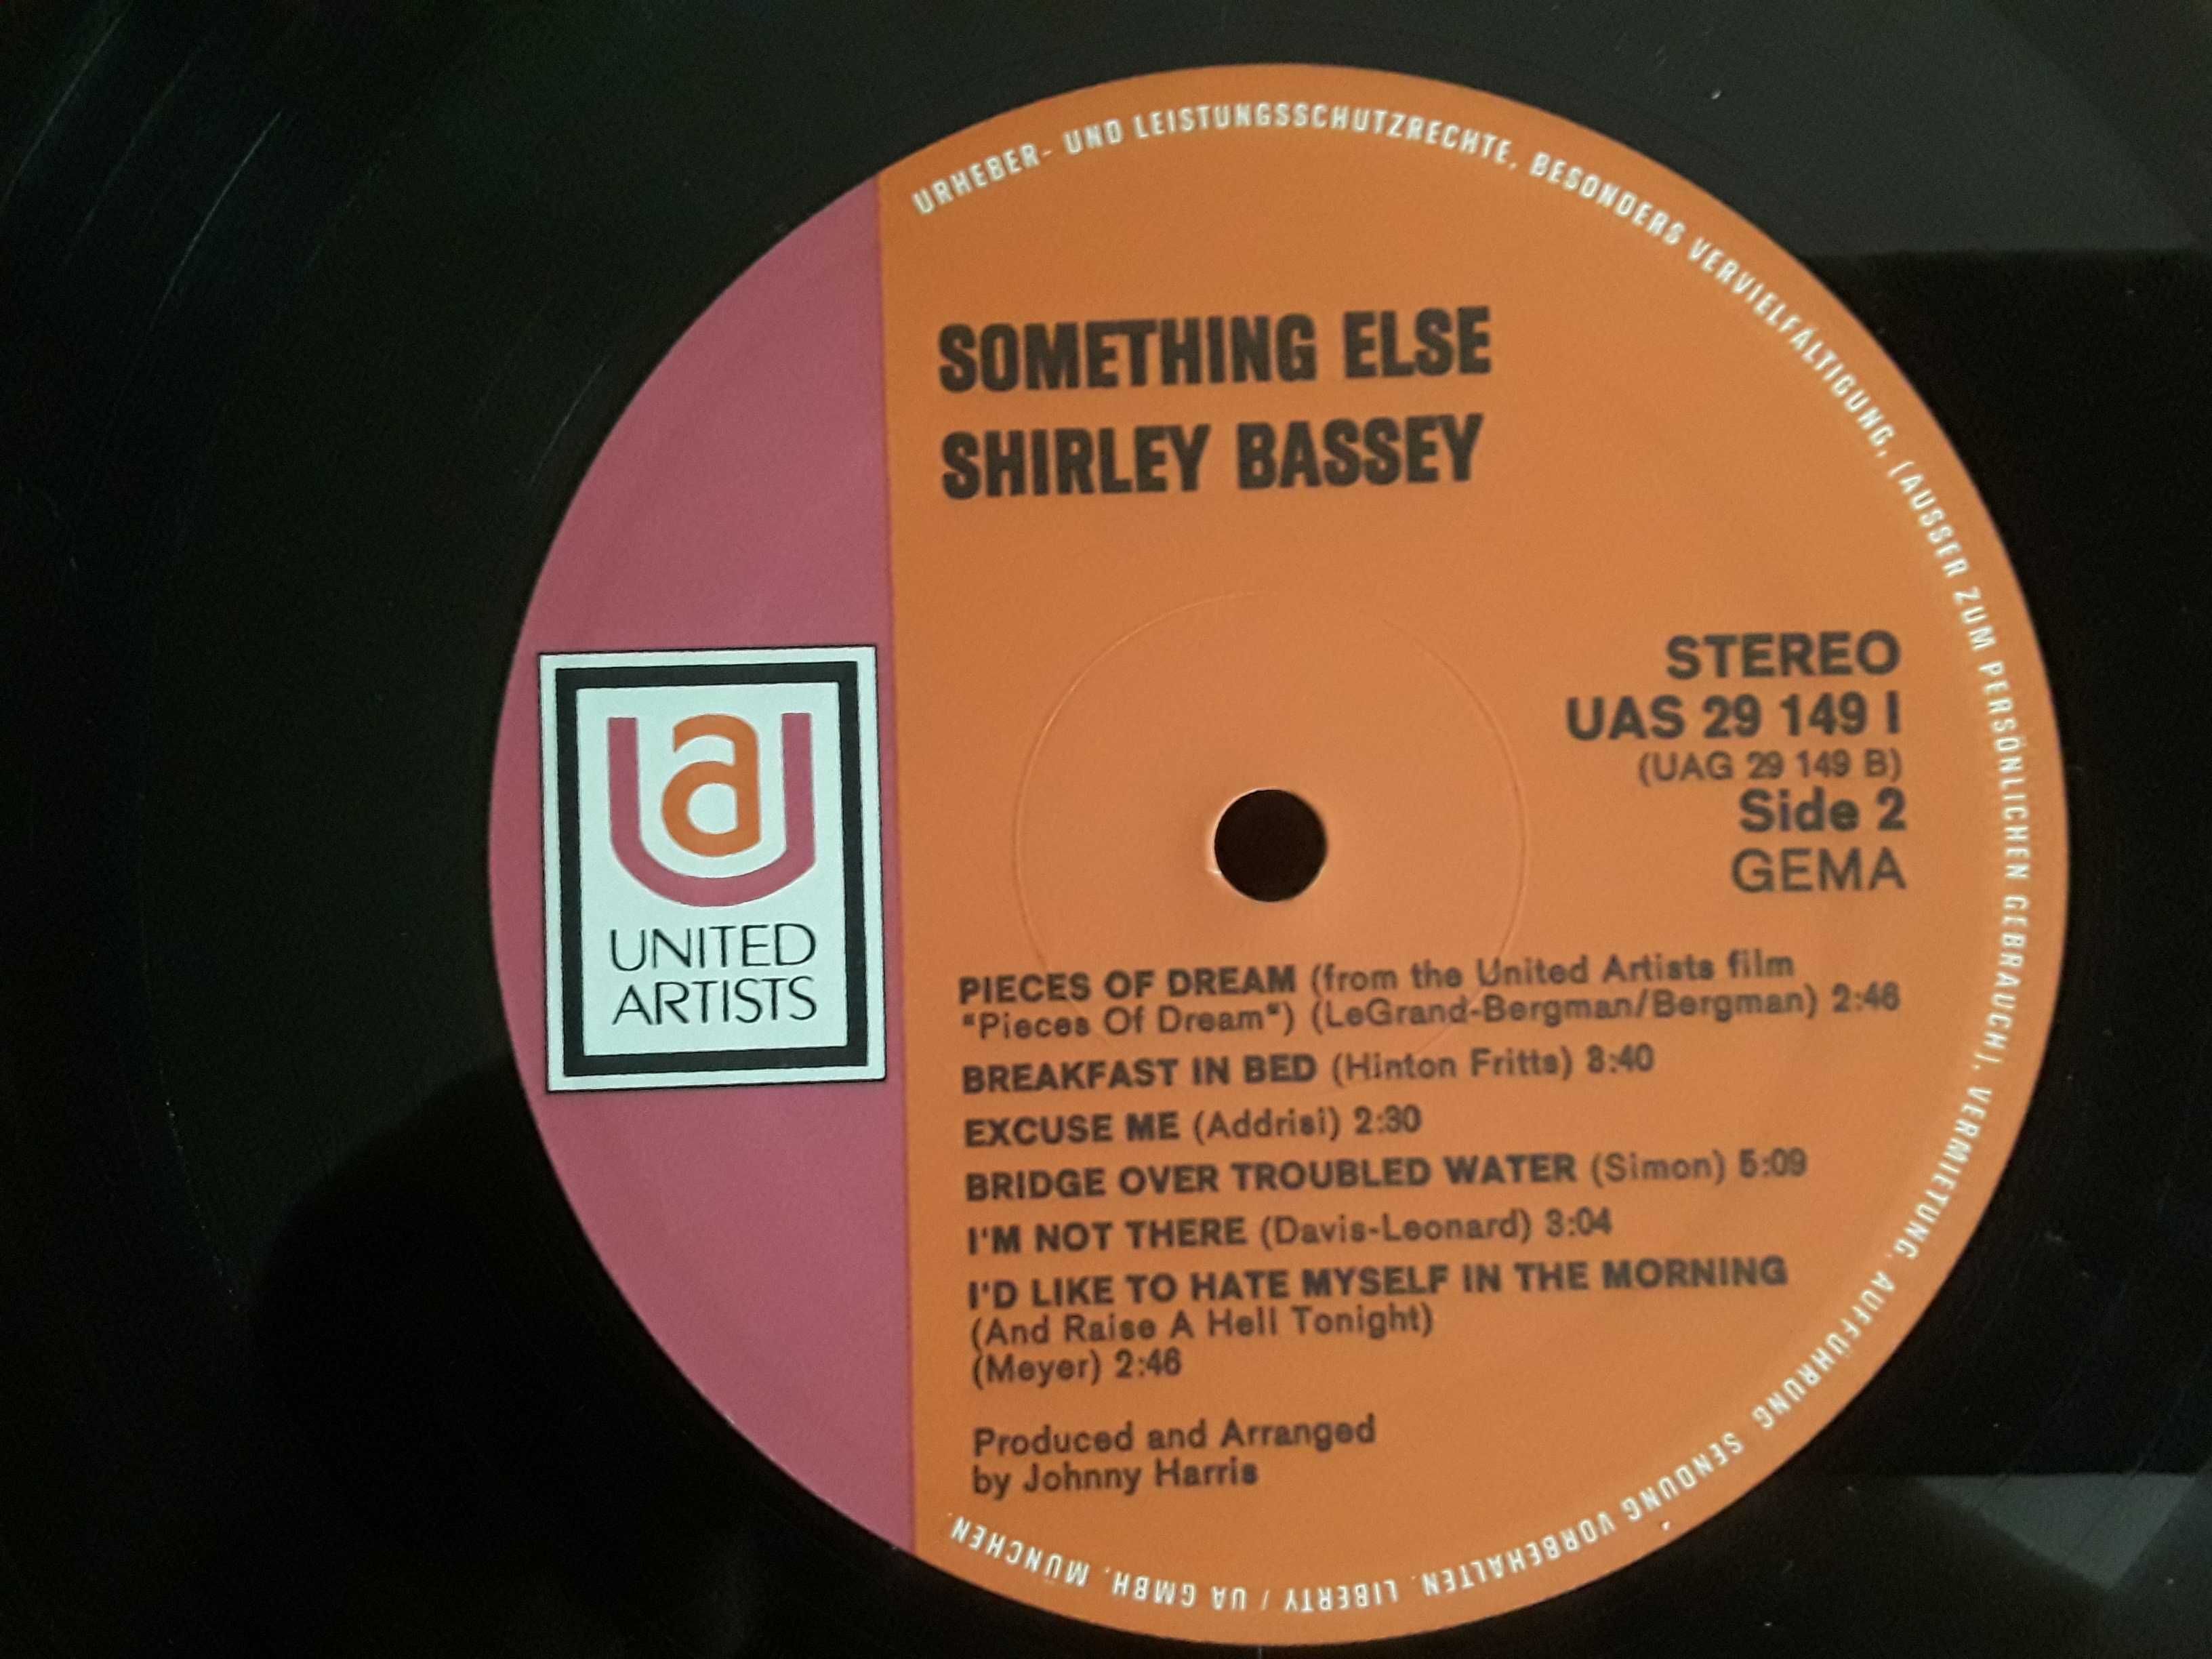 Виниловая пластинка Shirley Bassey  Something Else  1971 г.